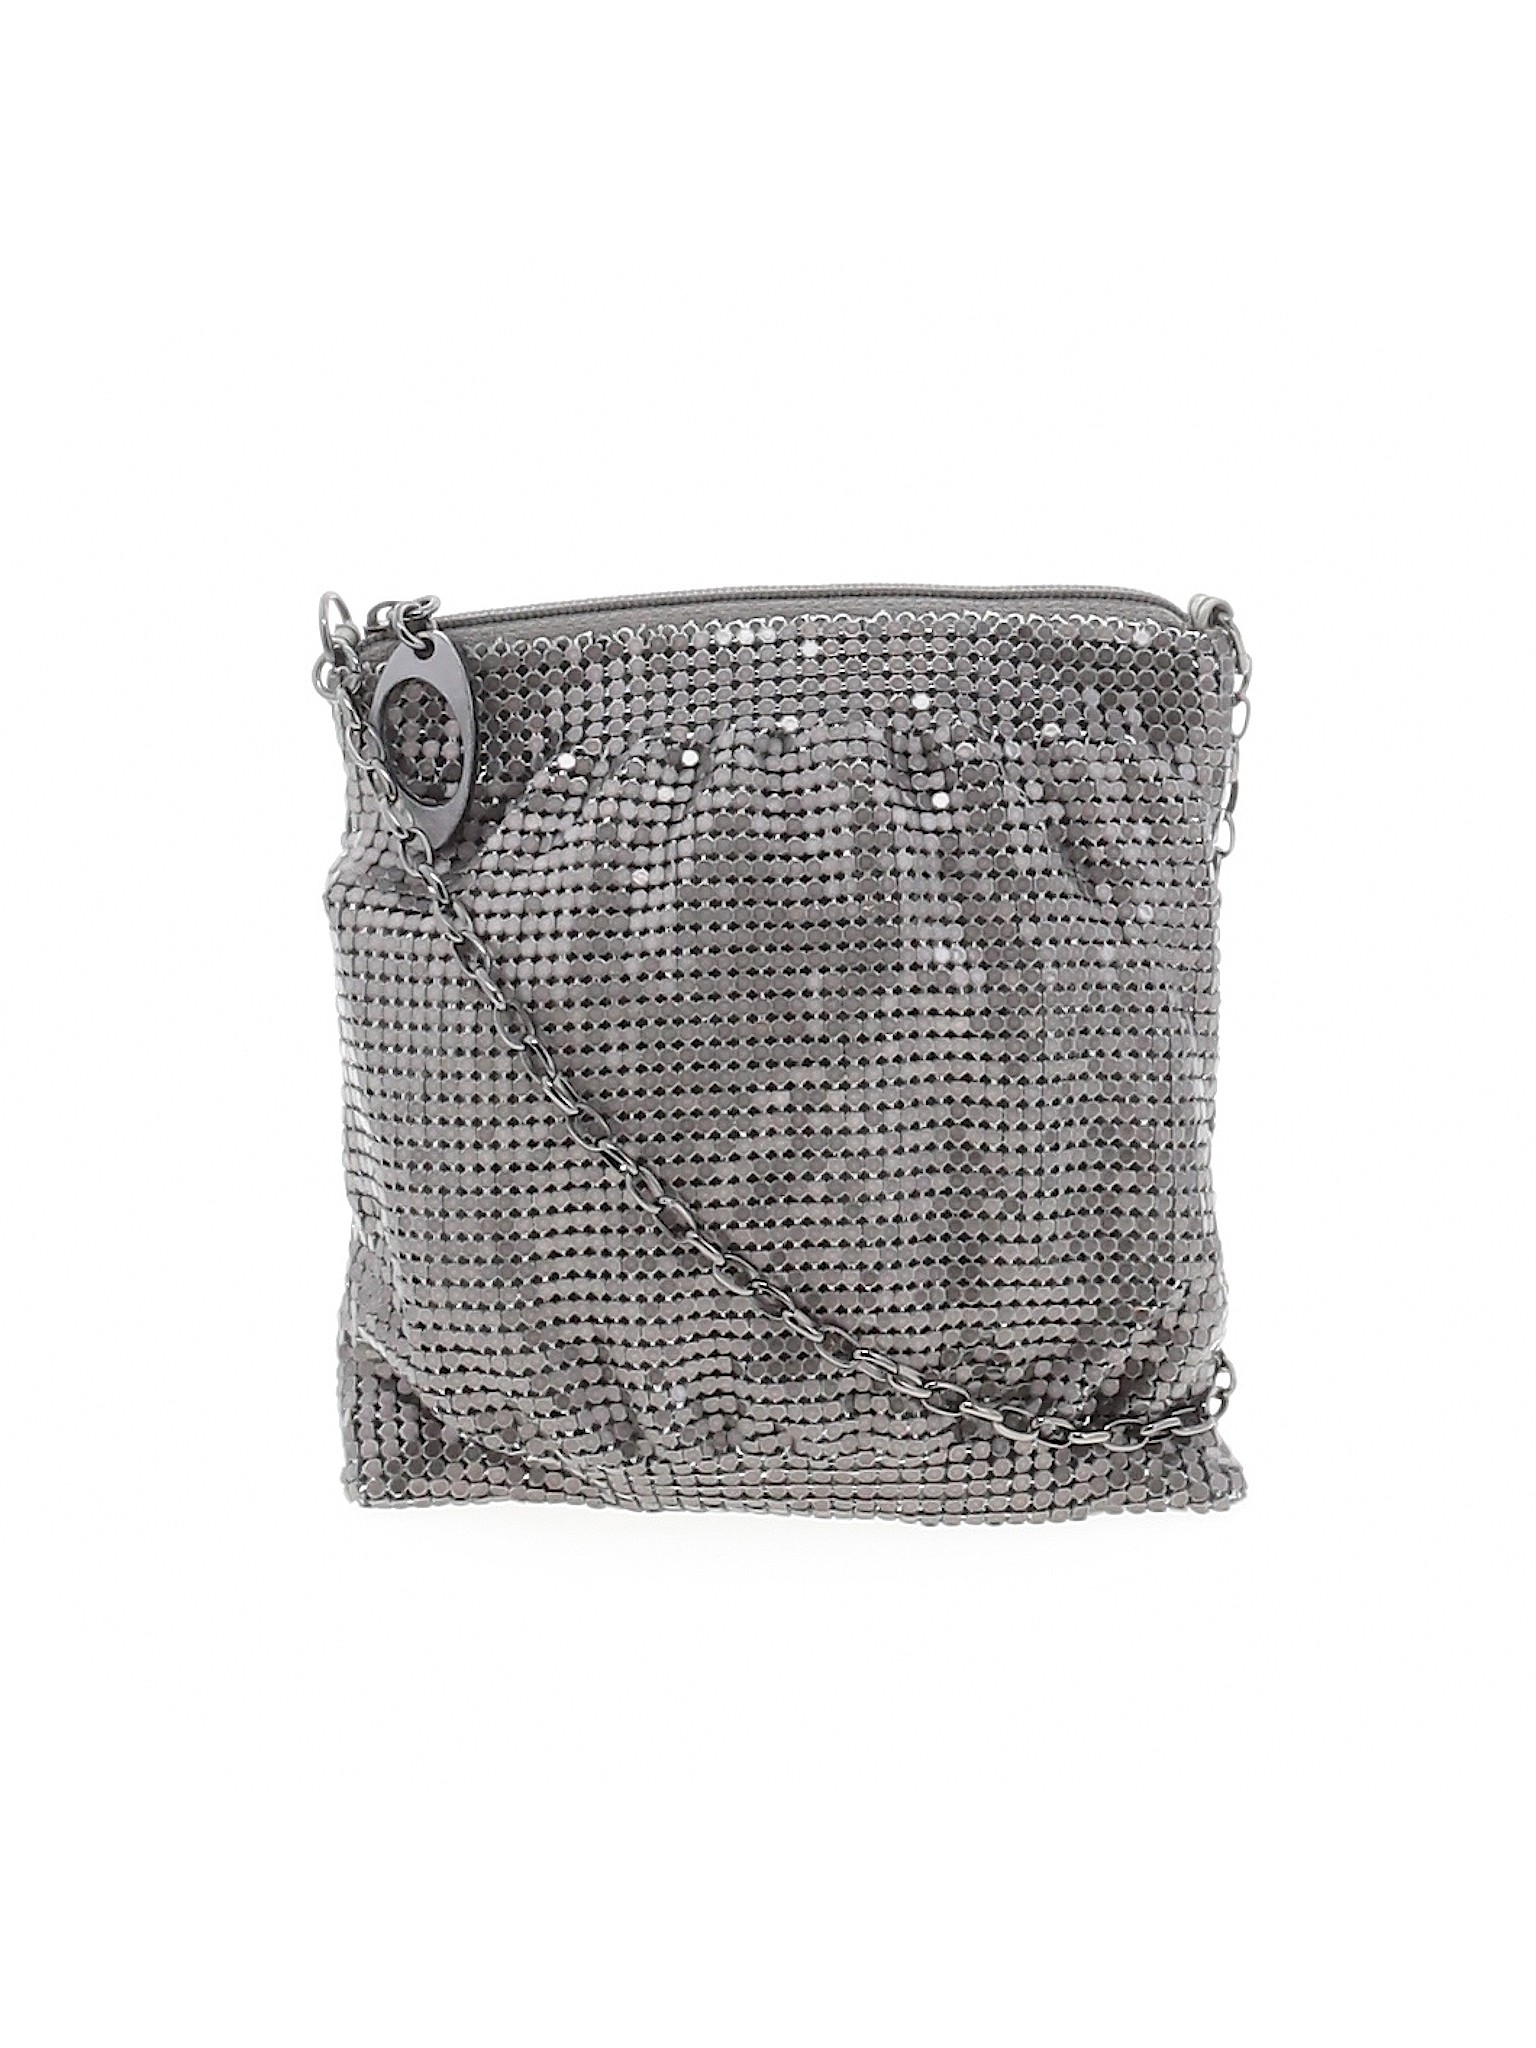 Unbranded Women Silver Crossbody Bag One Size | eBay